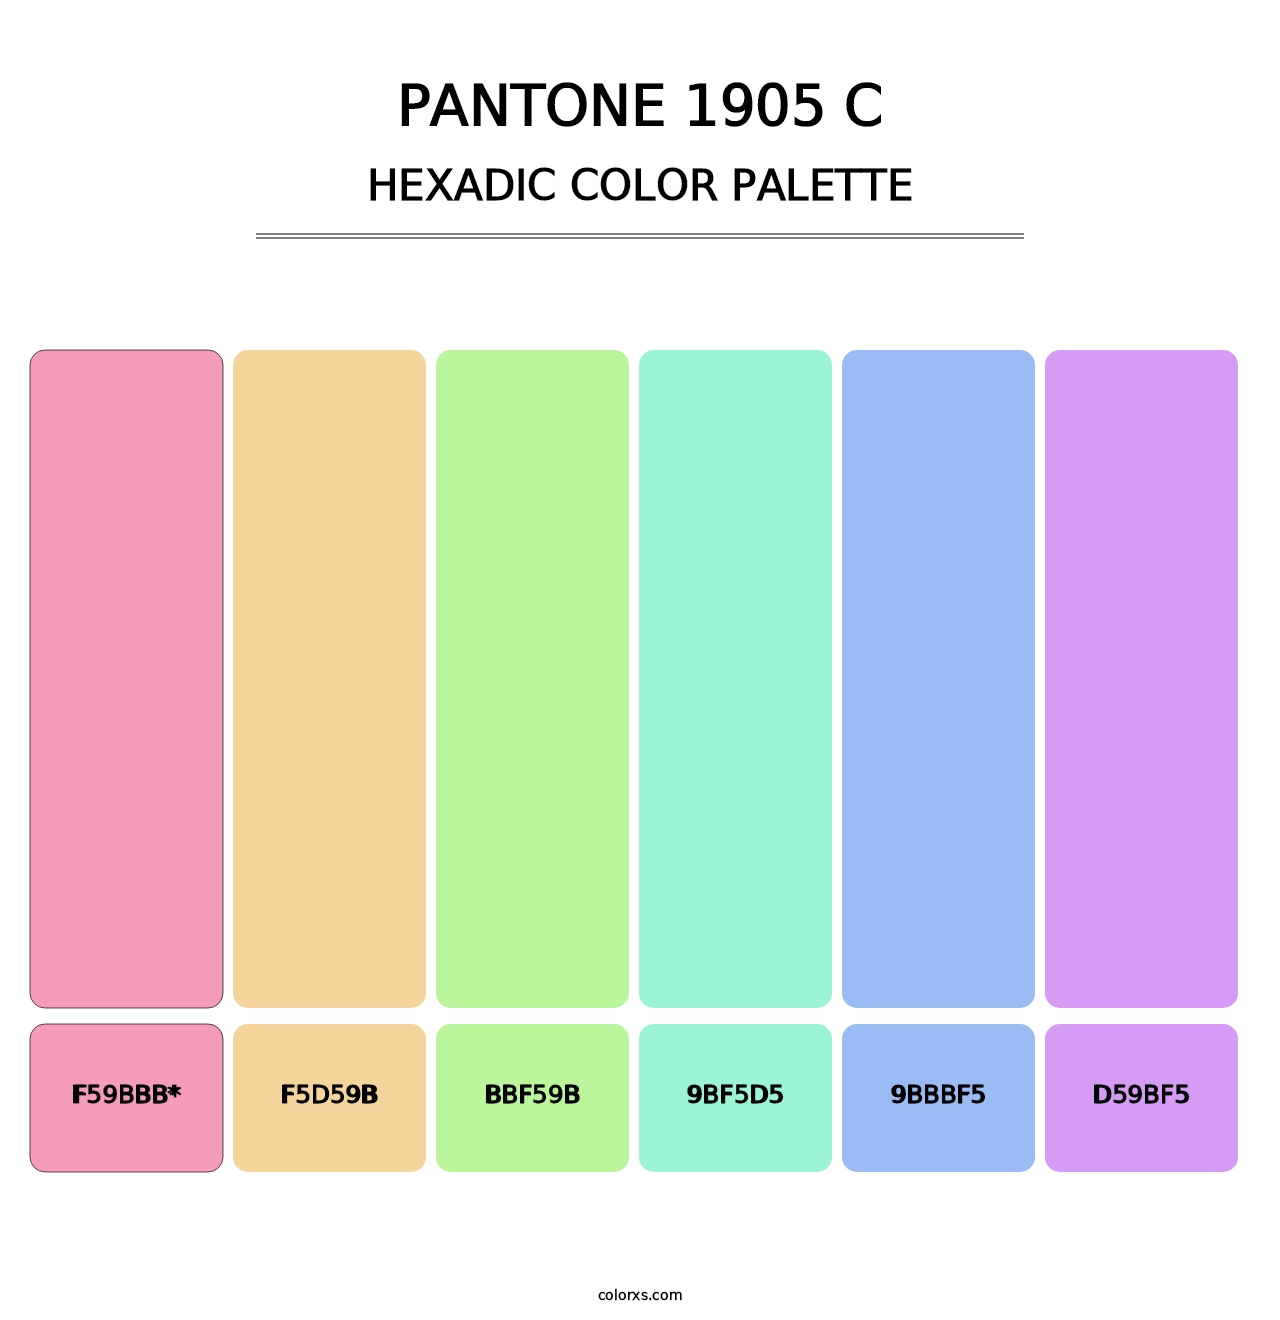 PANTONE 1905 C - Hexadic Color Palette